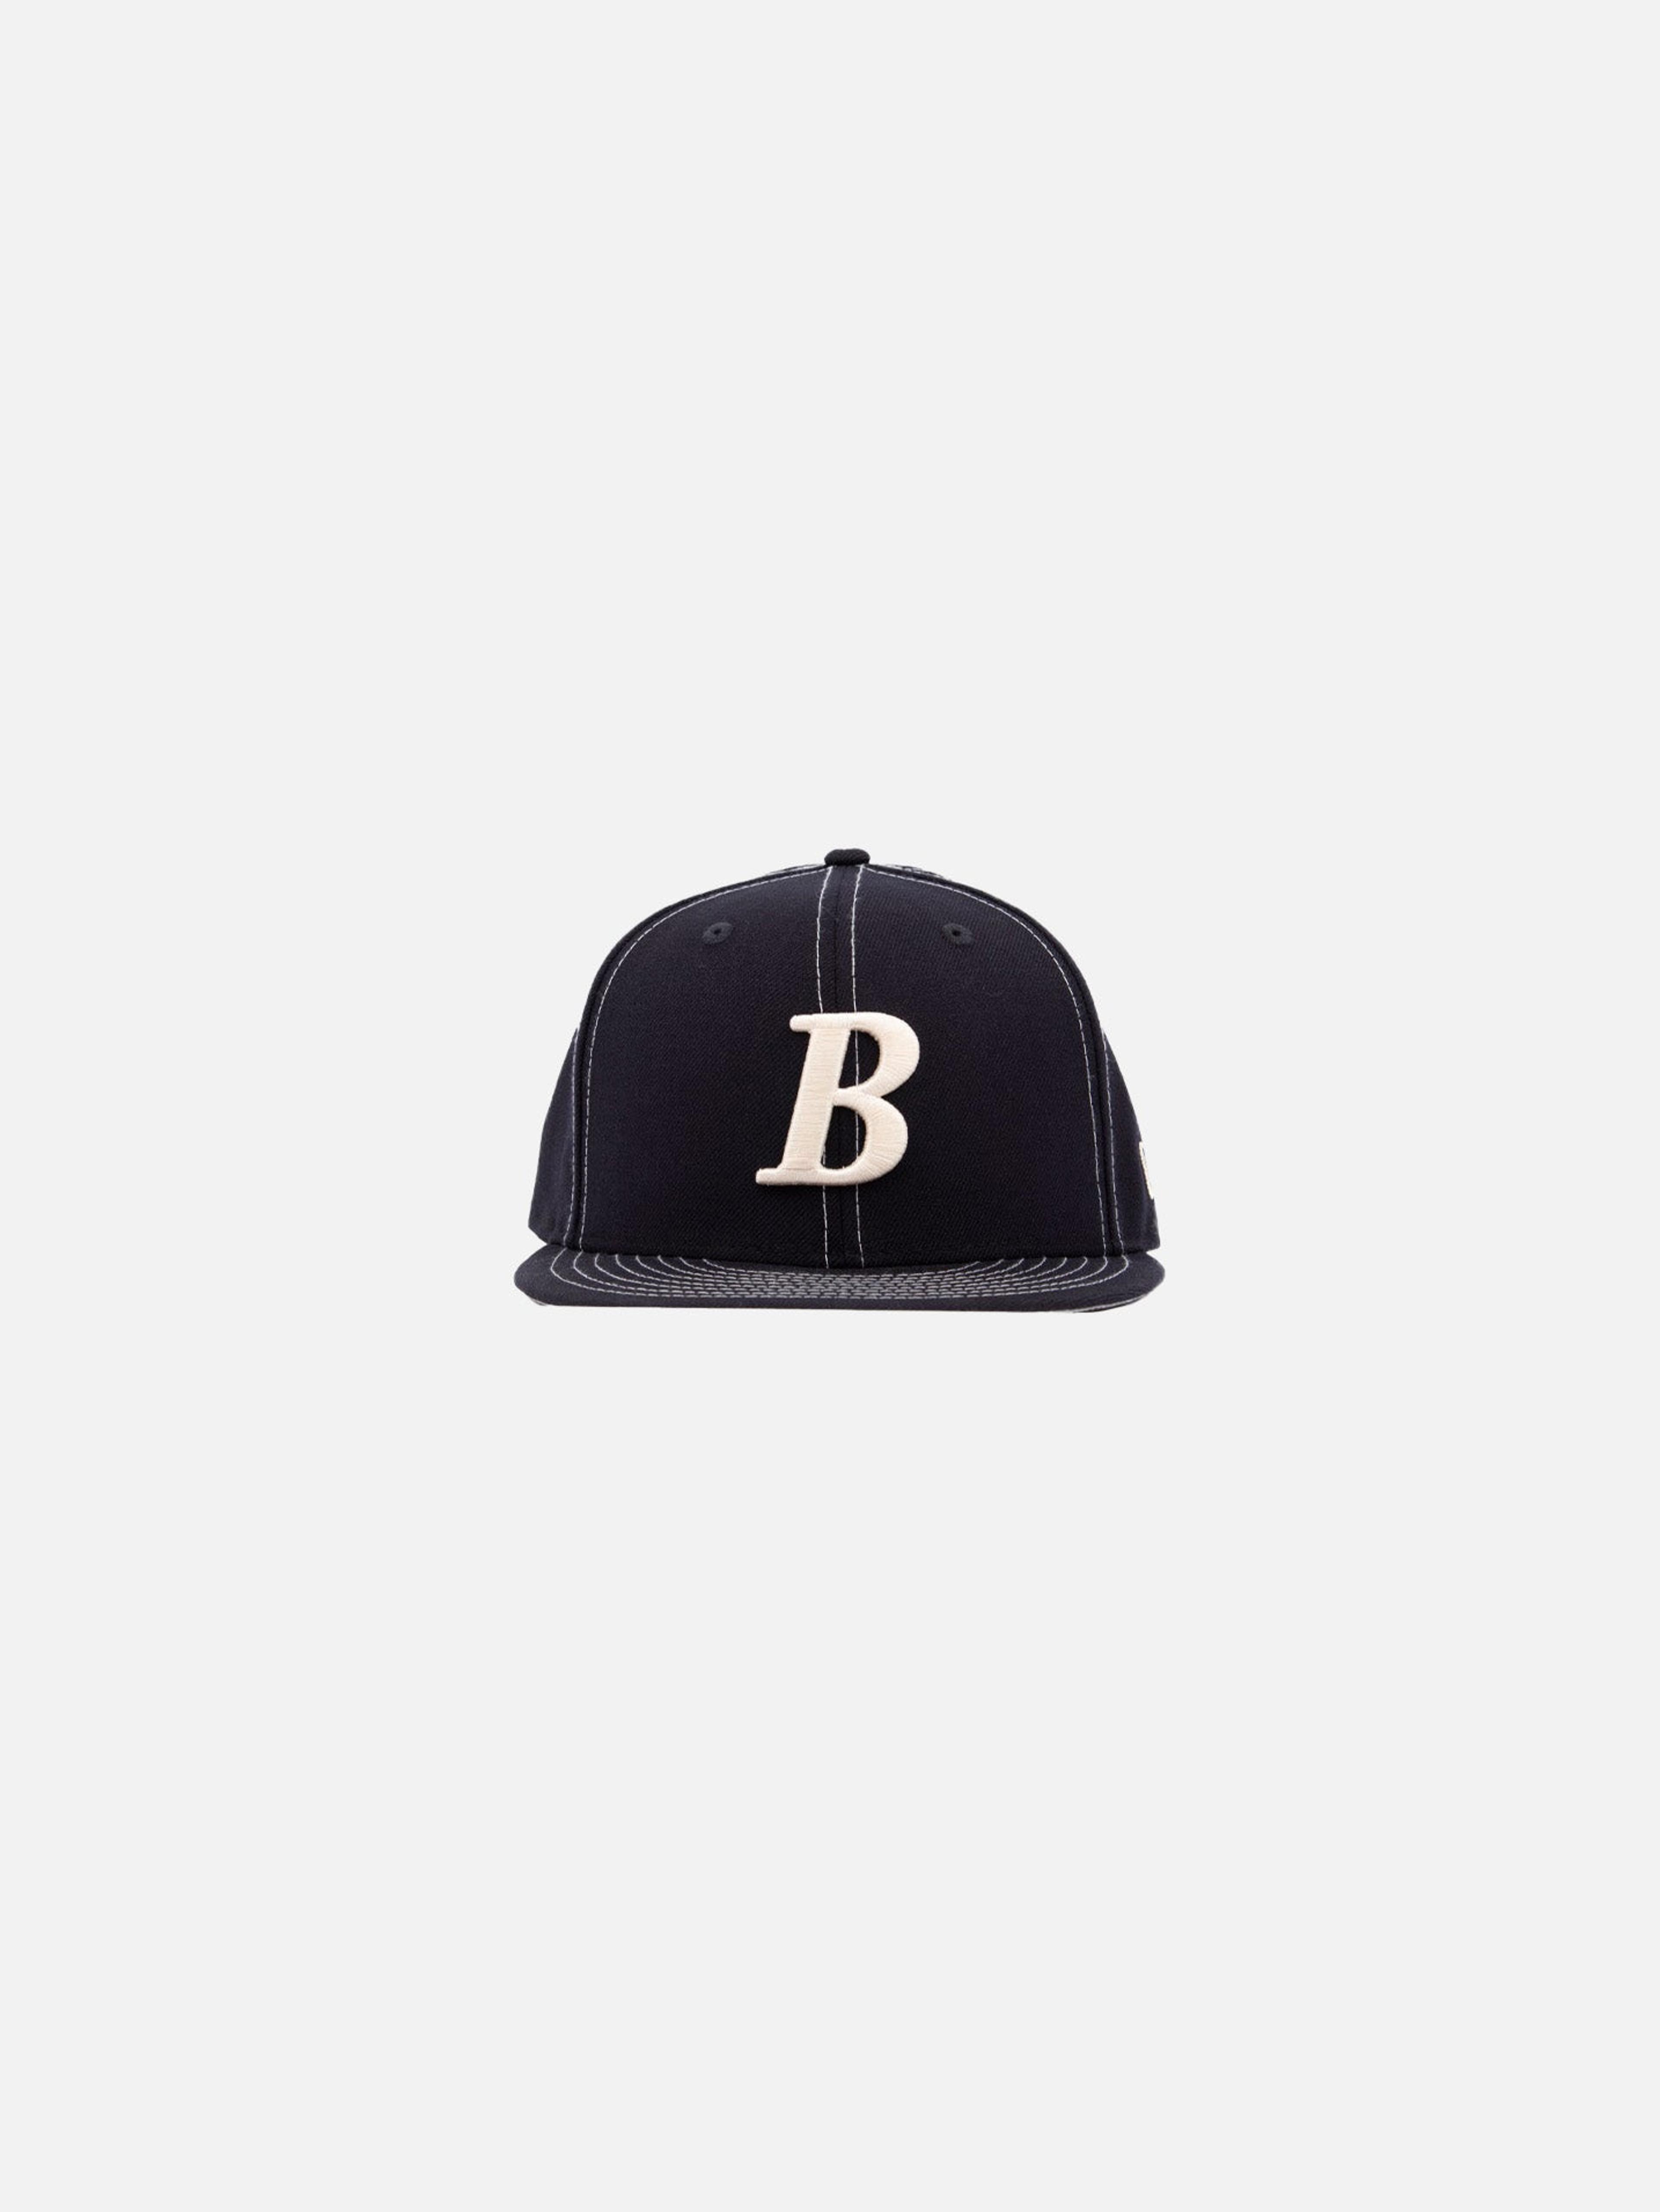 New Era B Logo Cap - Navy/White Contrast Stitch